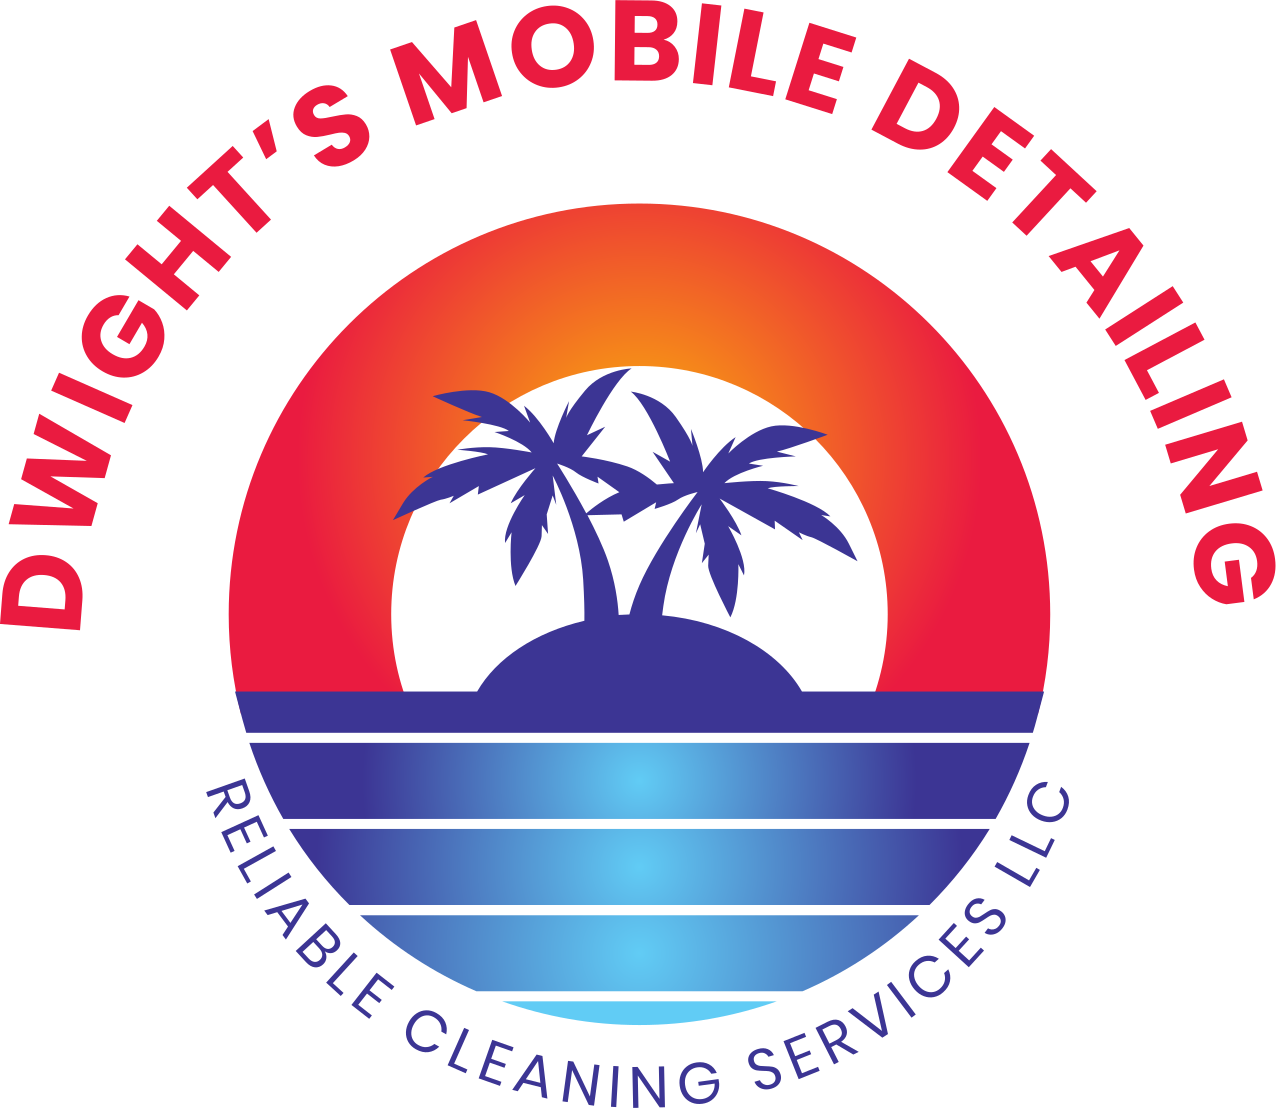 Dwight’s Mobile Detailing 's logo